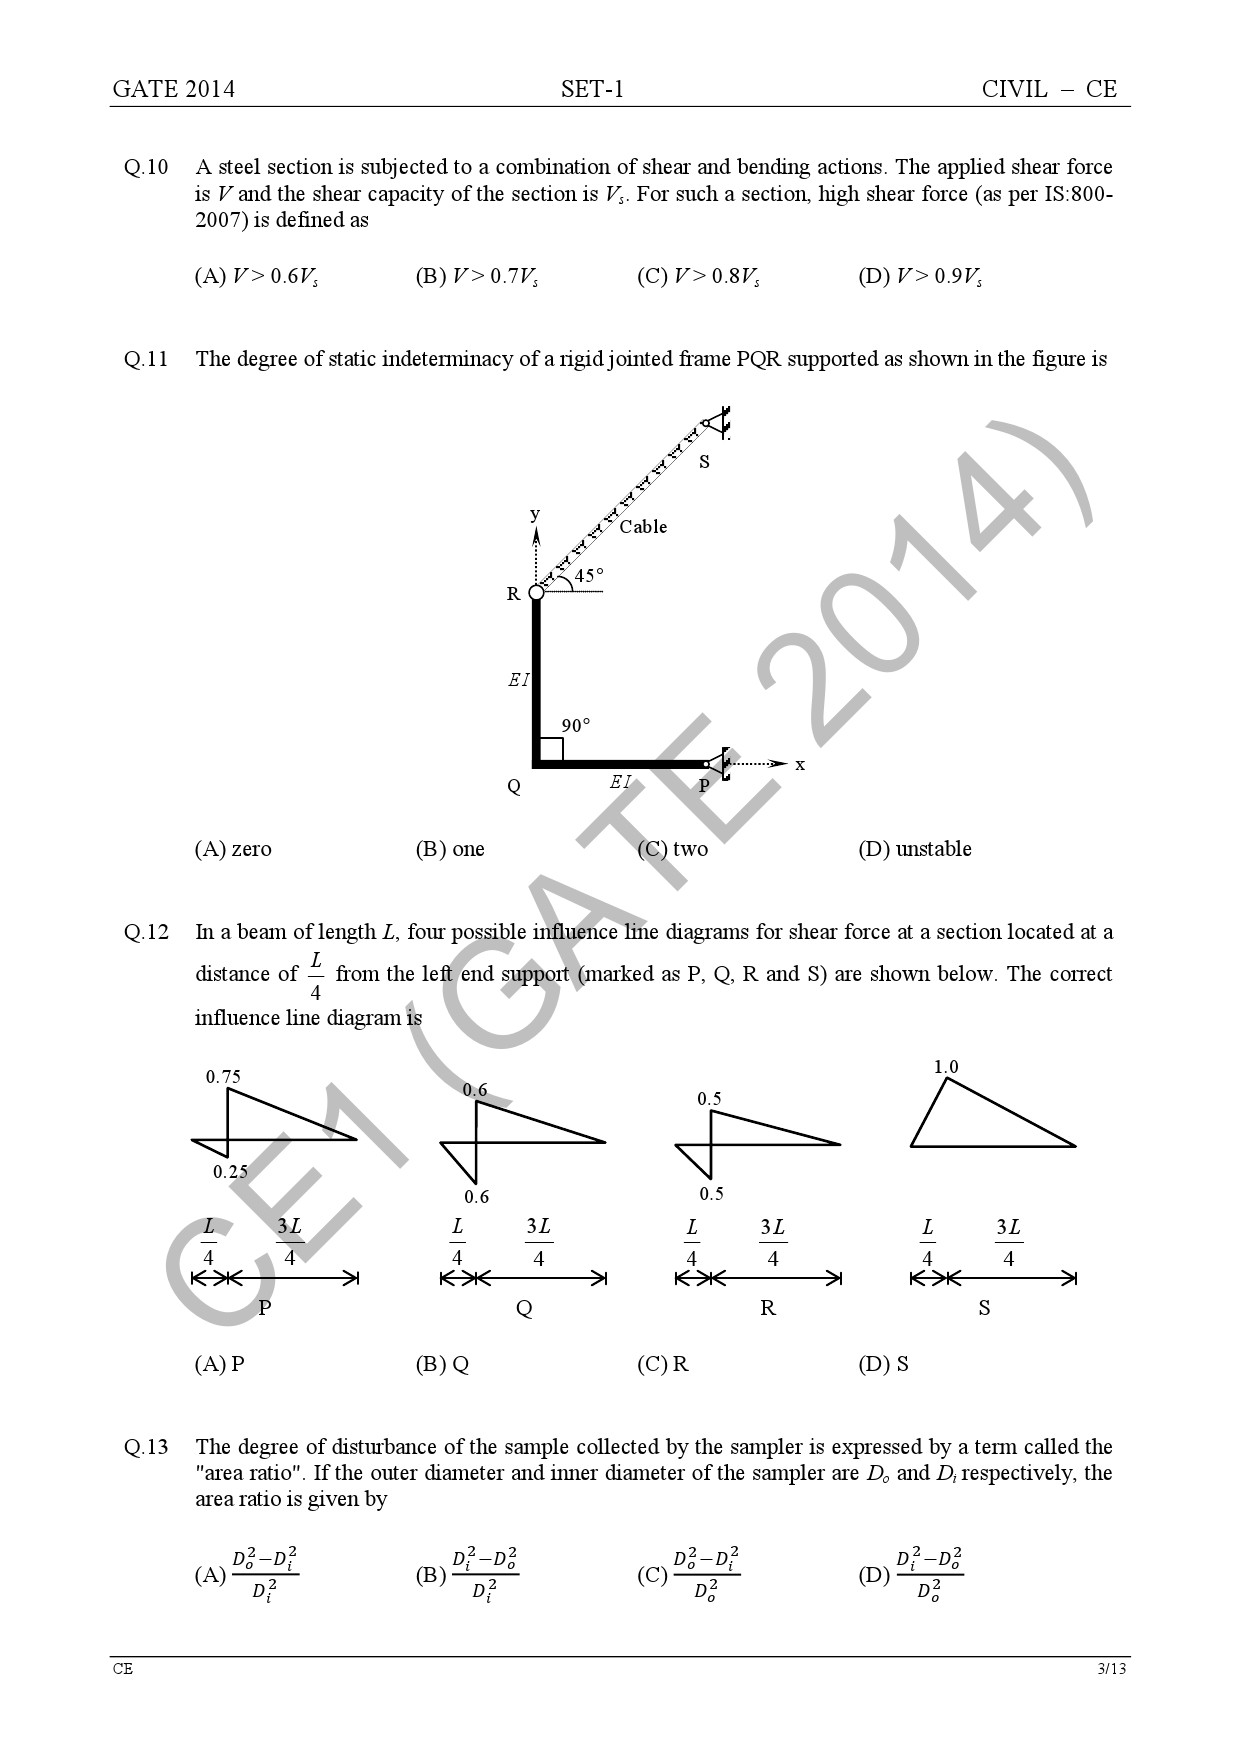 GATE Exam Question Paper 2014 Civil Engineering Set 1 9